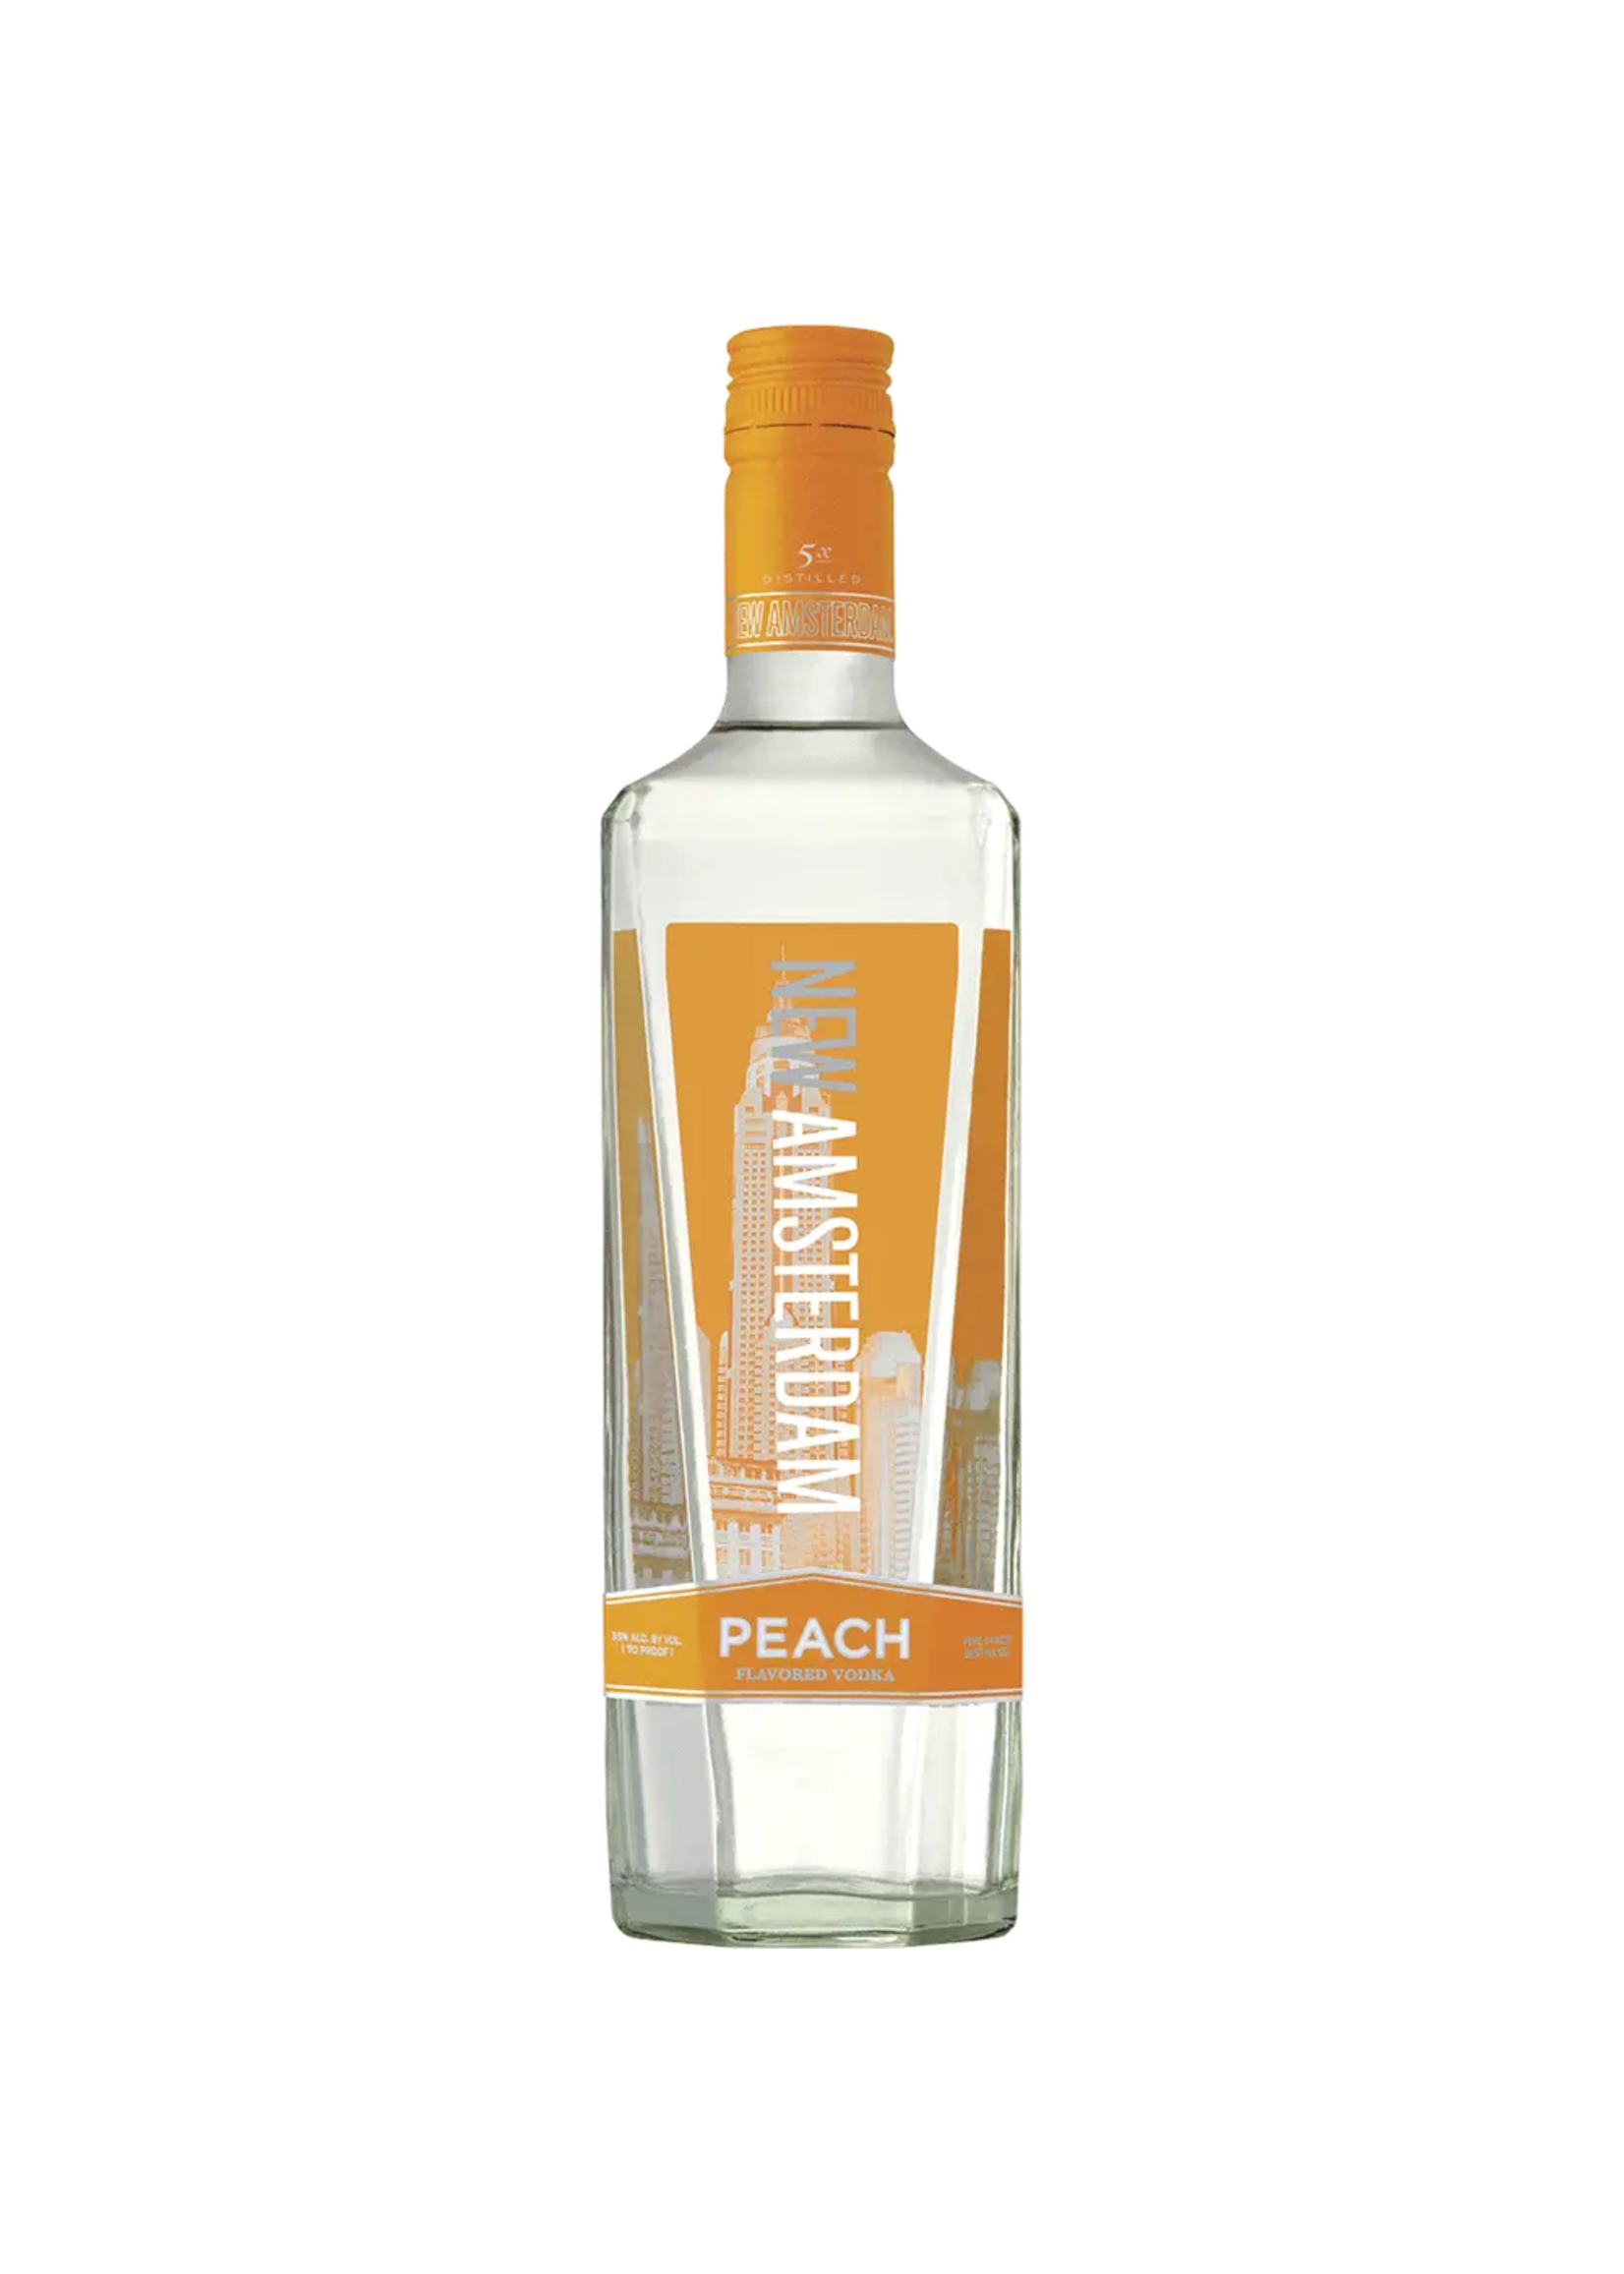 New Amsterdam Peach Flavored Vodka 70Proof 750ml